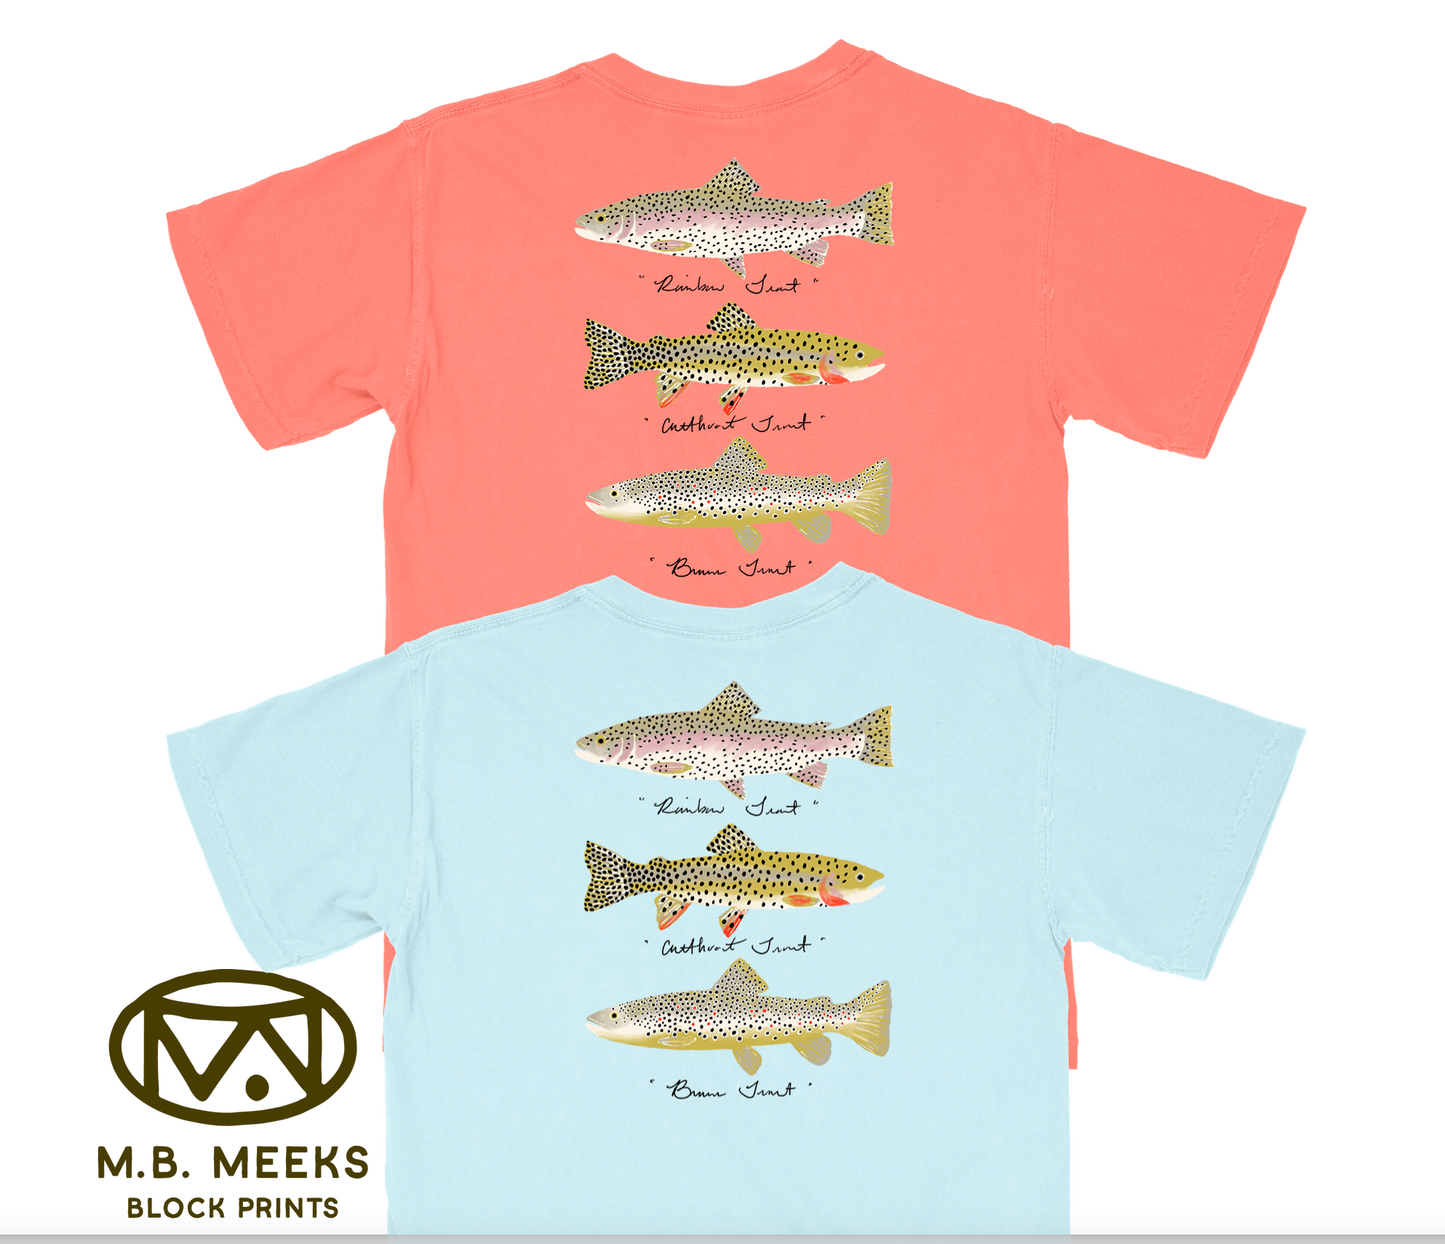 MB Meeks Block Prints Trout Shirt